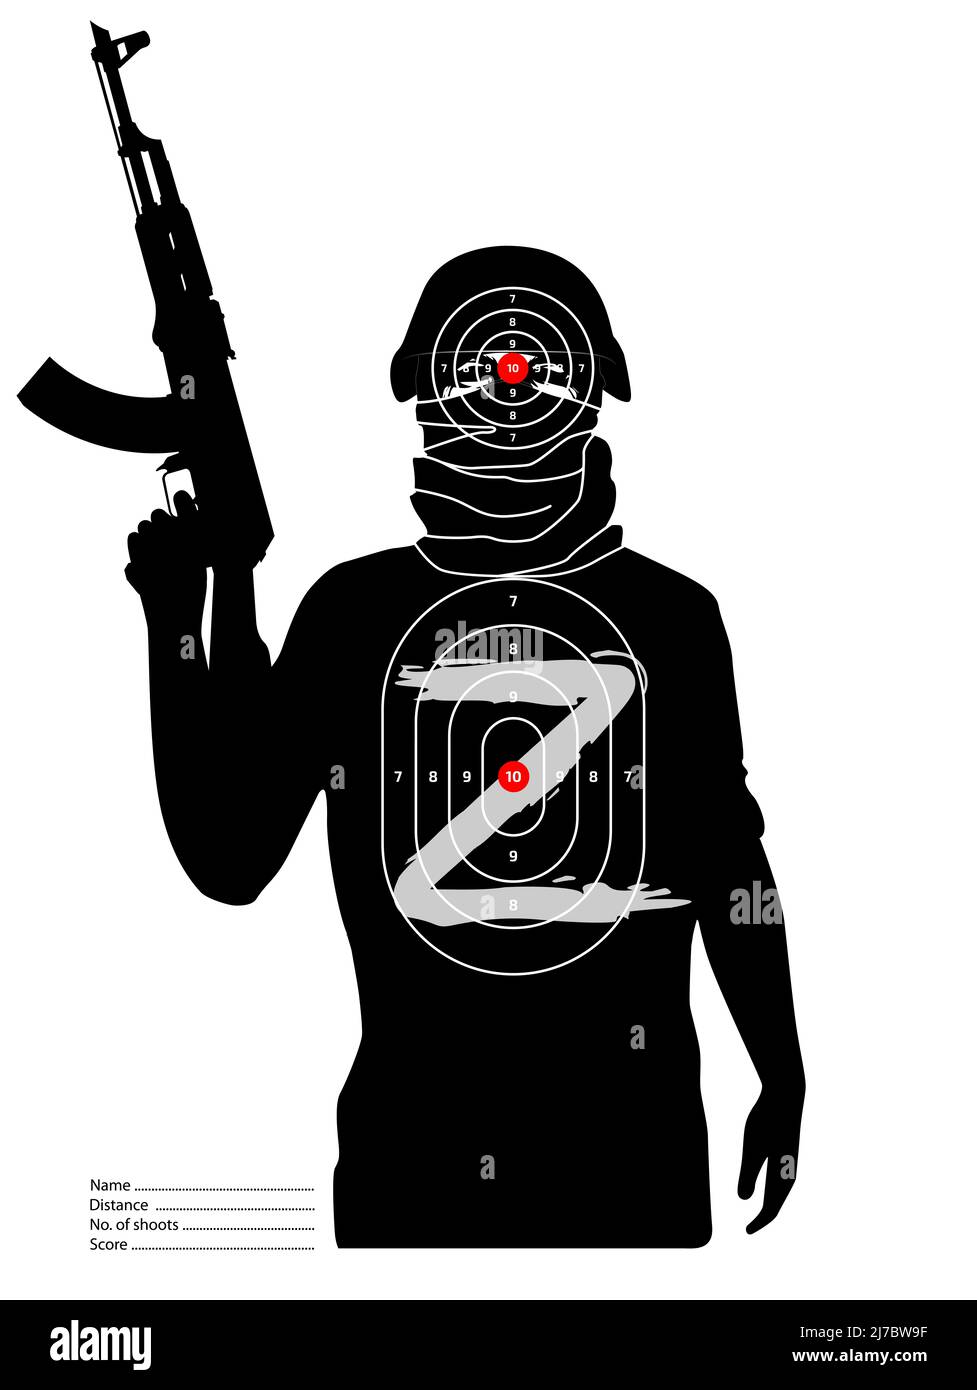 Shooting range target - soldier with Z symbol - war of Ukraine Stock Photo